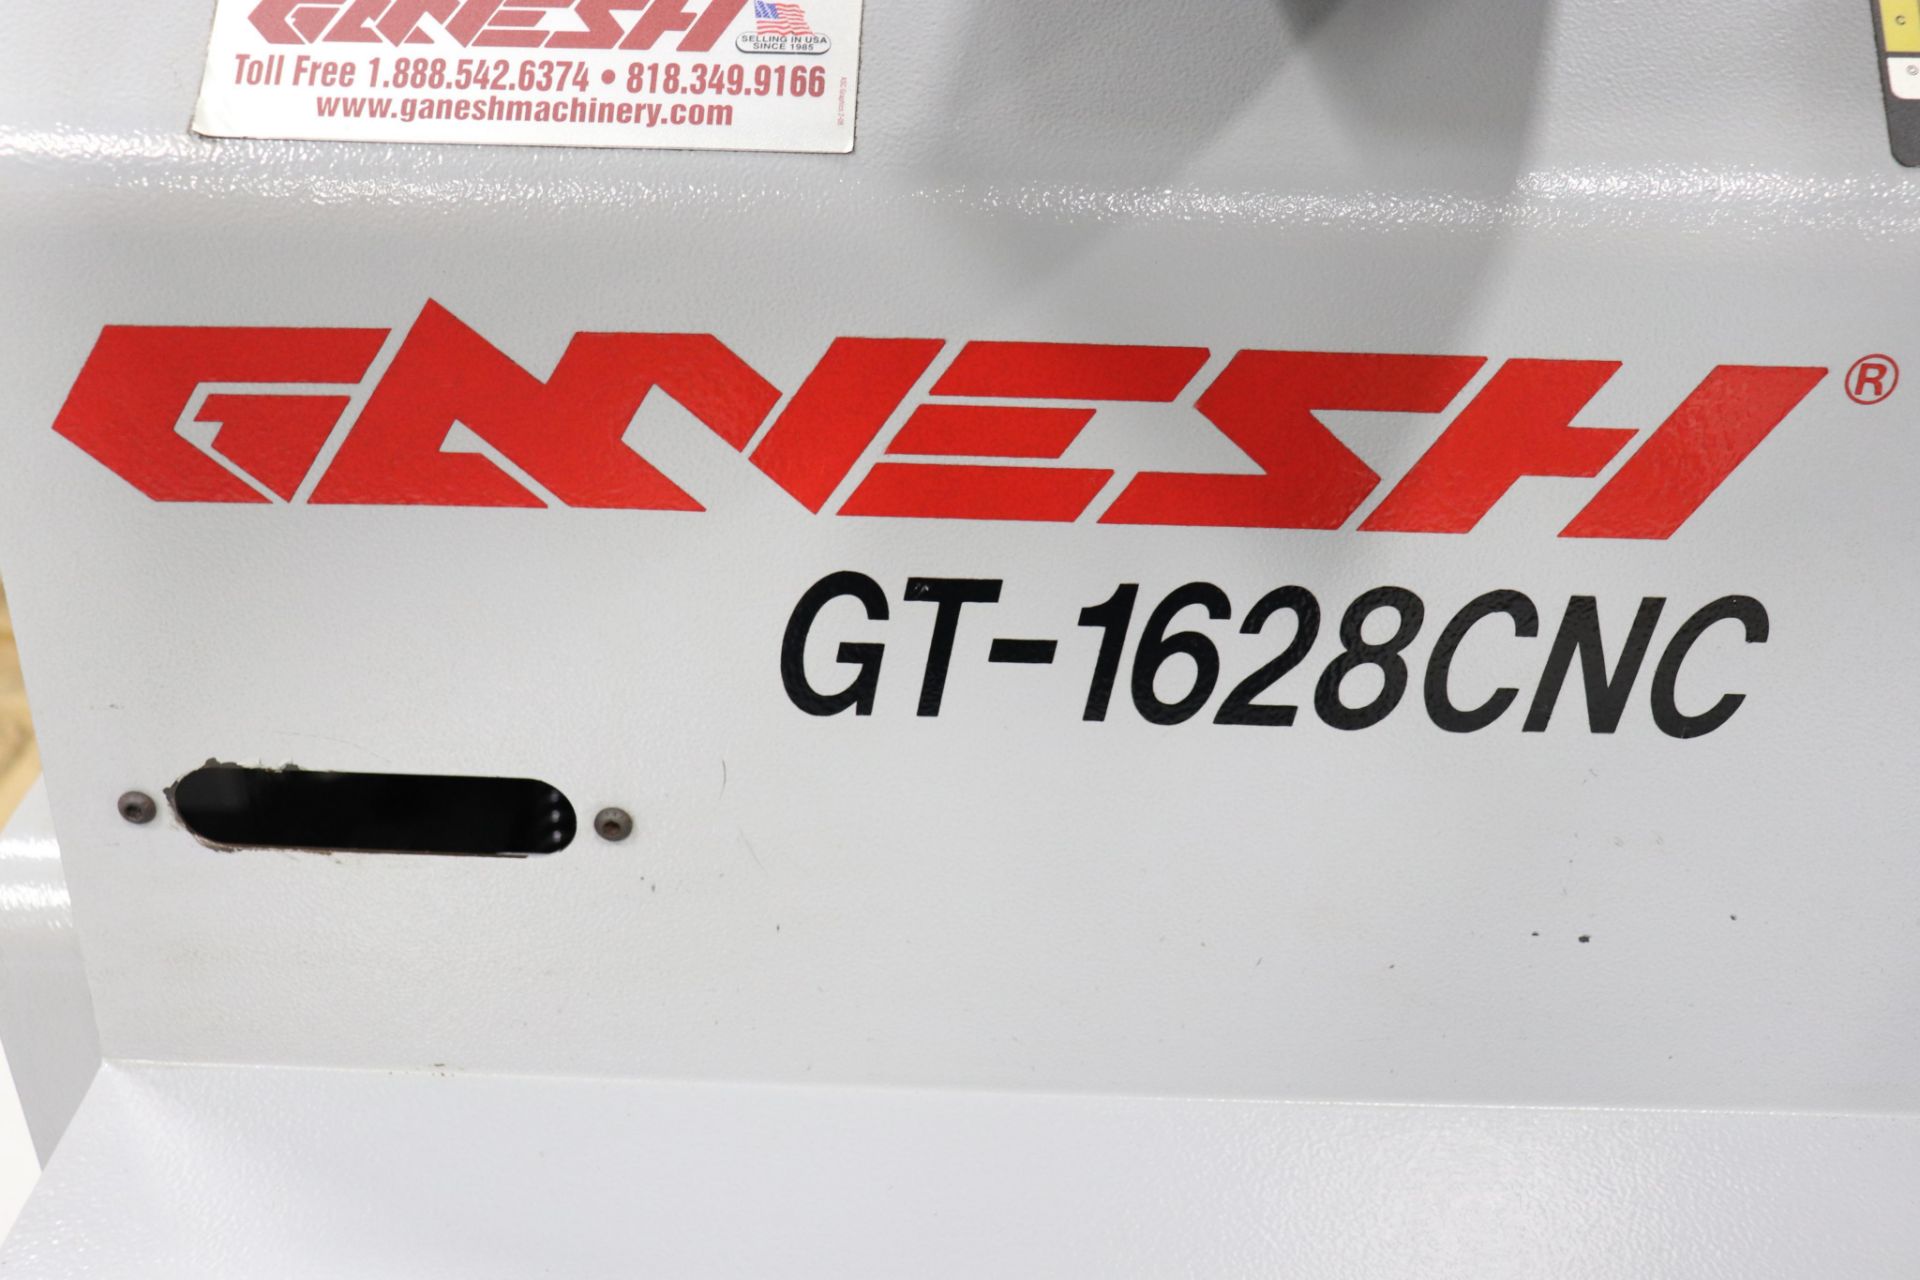 Ganesh GT-1628 CNC lathe w/ Fagor control 2011 - Image 15 of 20